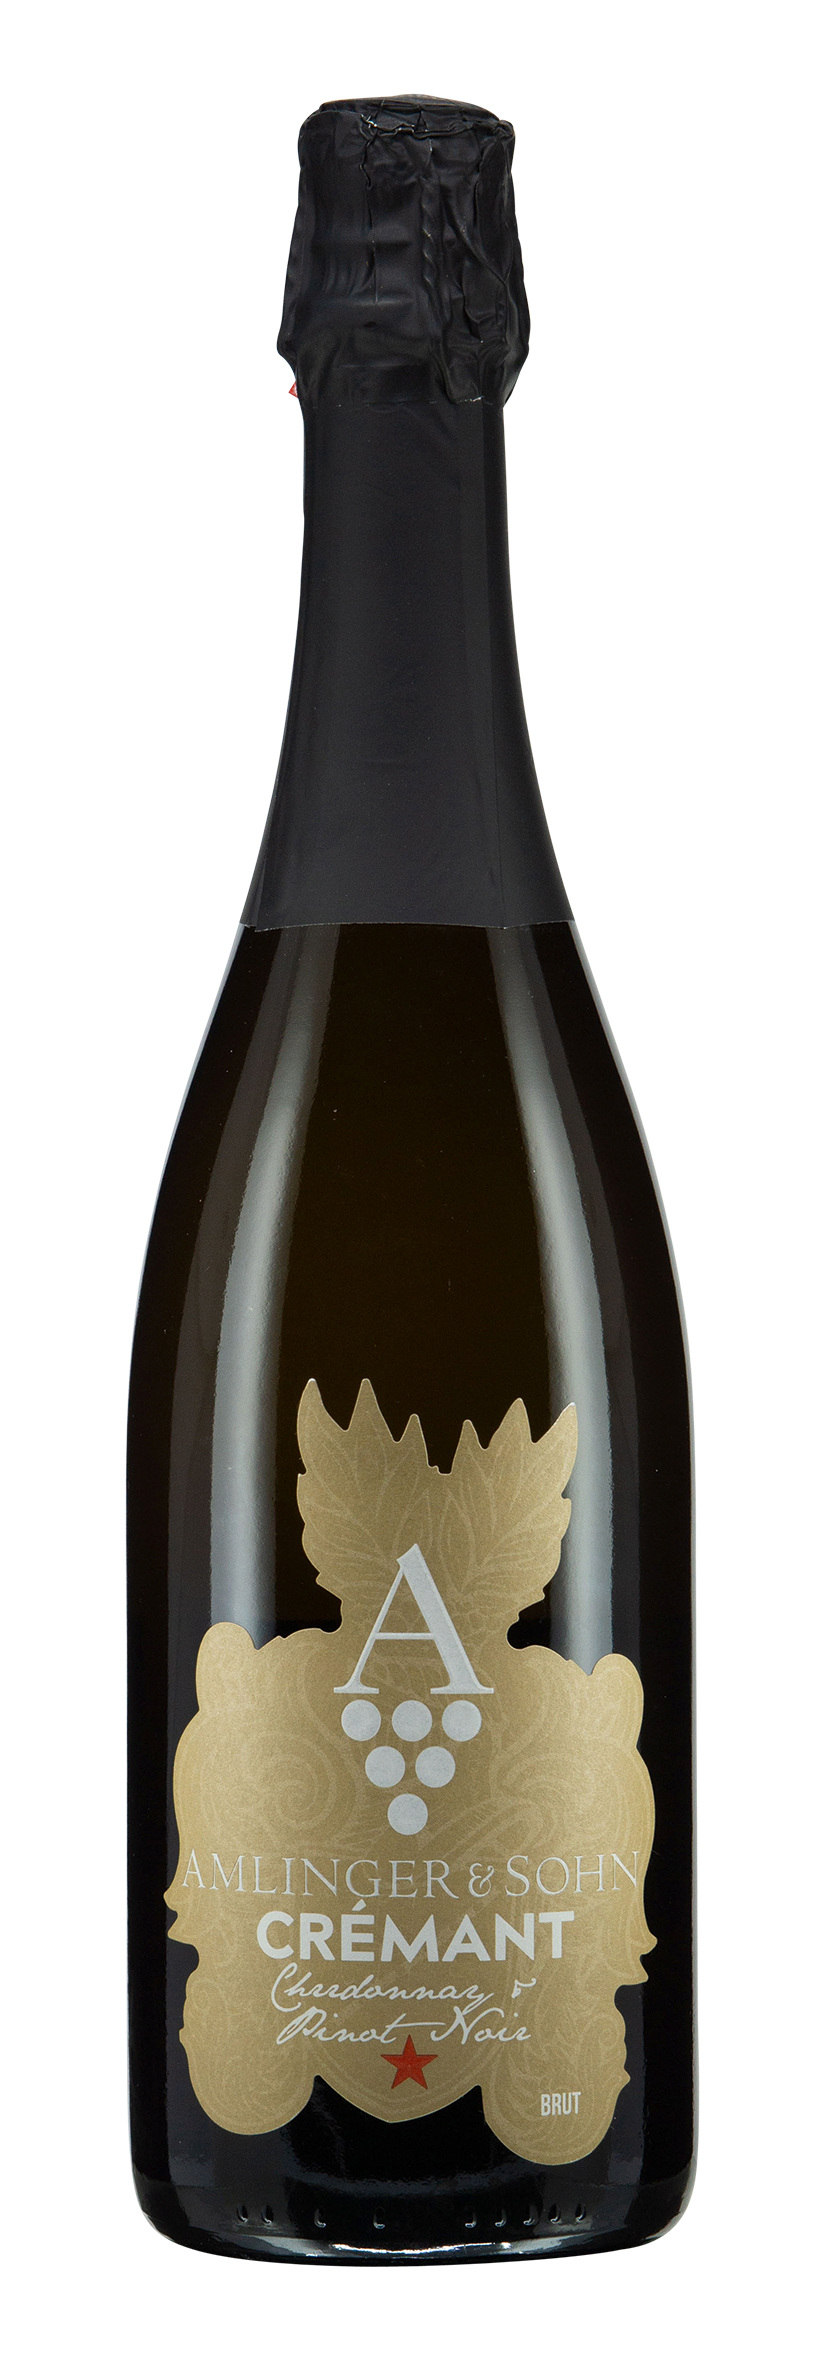 Chardonnay & Pinot Noir Crémant b. A. Brut 2020